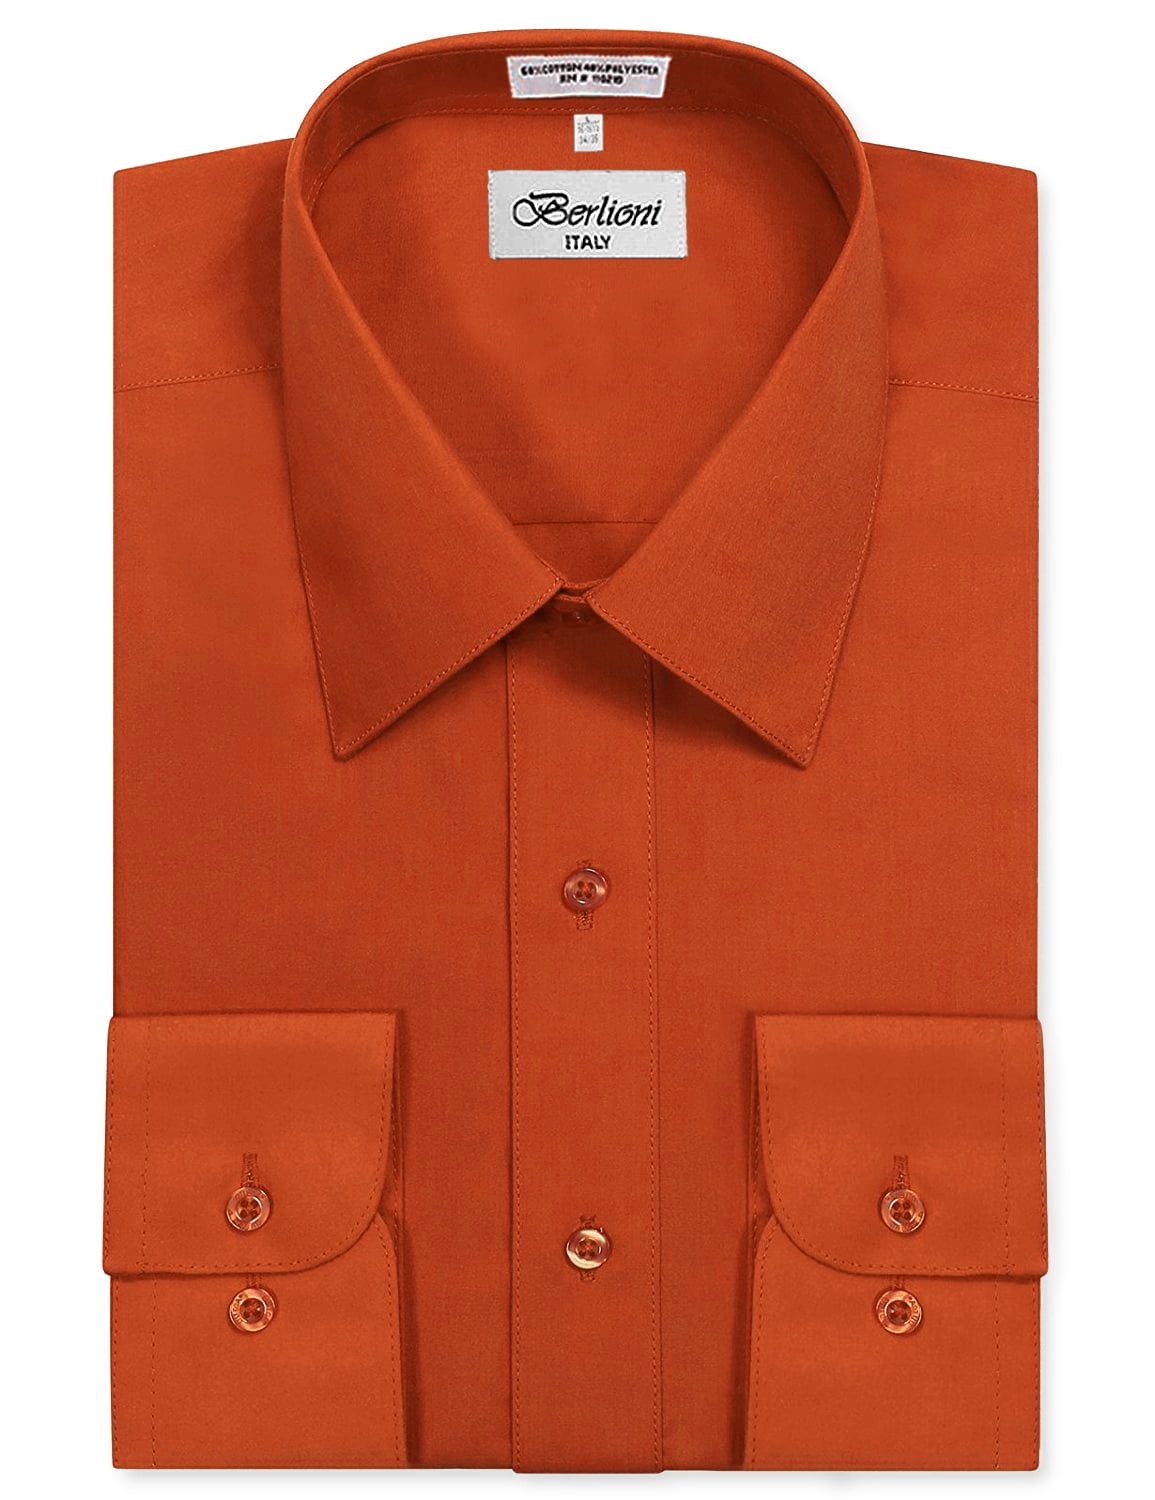 Berlioni Italy Men's Long Sleeve Solid Premium Dress Shirt - Walmart.com